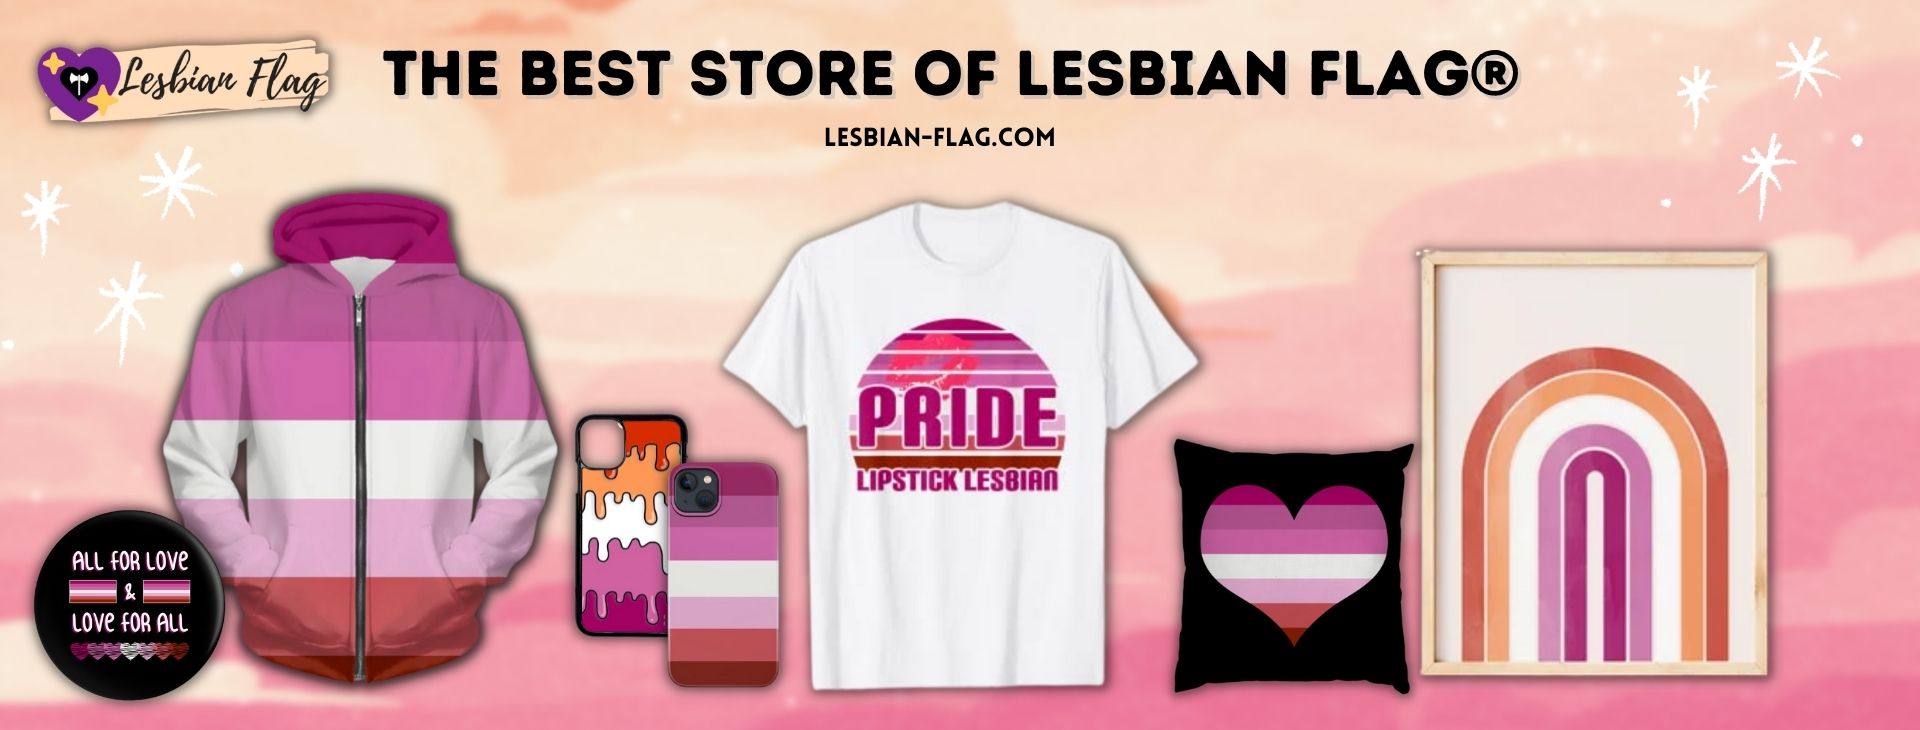 Lesbian Flags Store Banner - Lesbian Flag